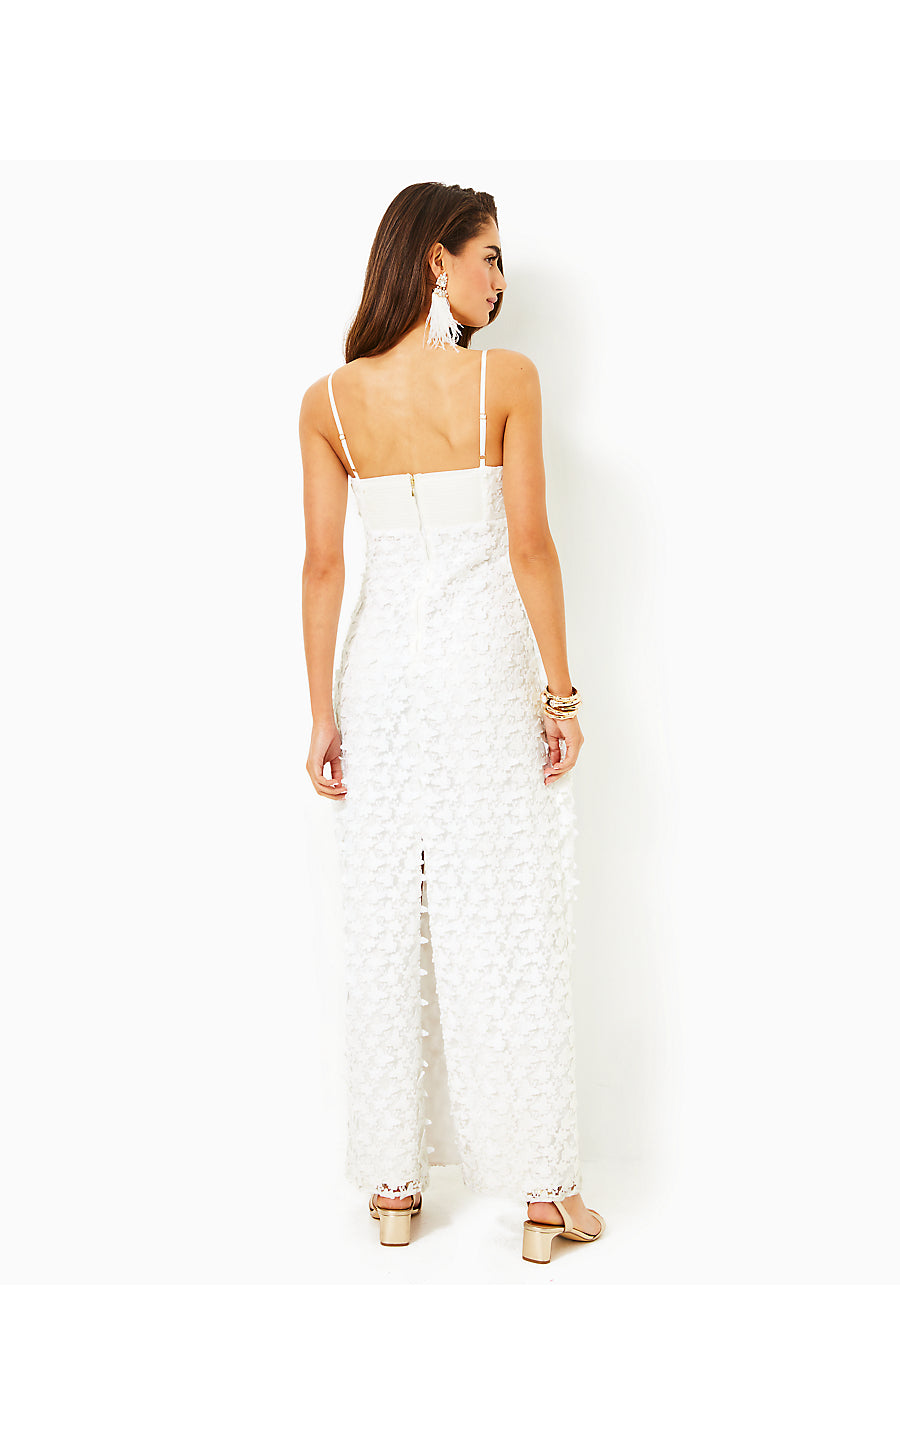 Gillian Lace Maxi Slip Dress | Resort White Butterfly Garden 3D Lace